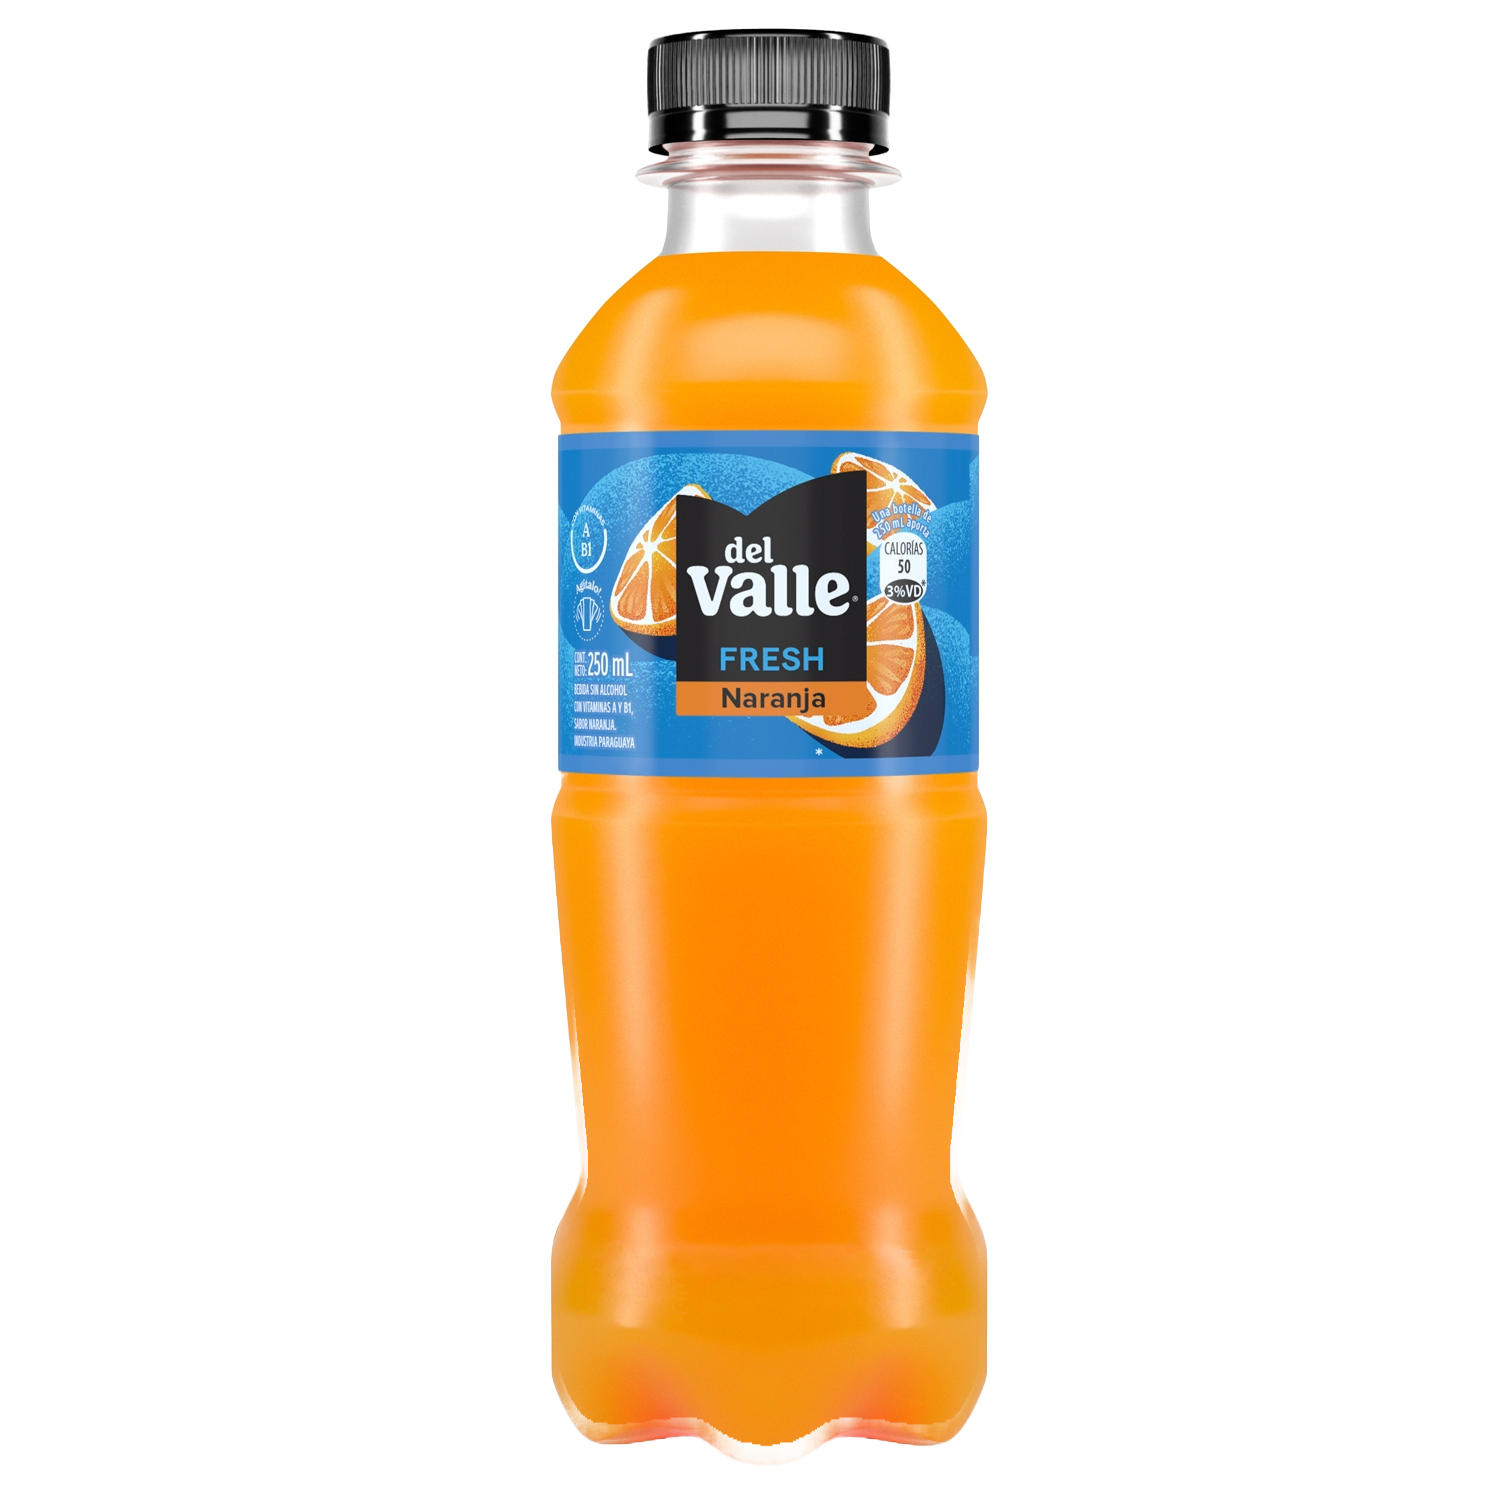 Botella de del Valle Fresh Naranja 250 mL